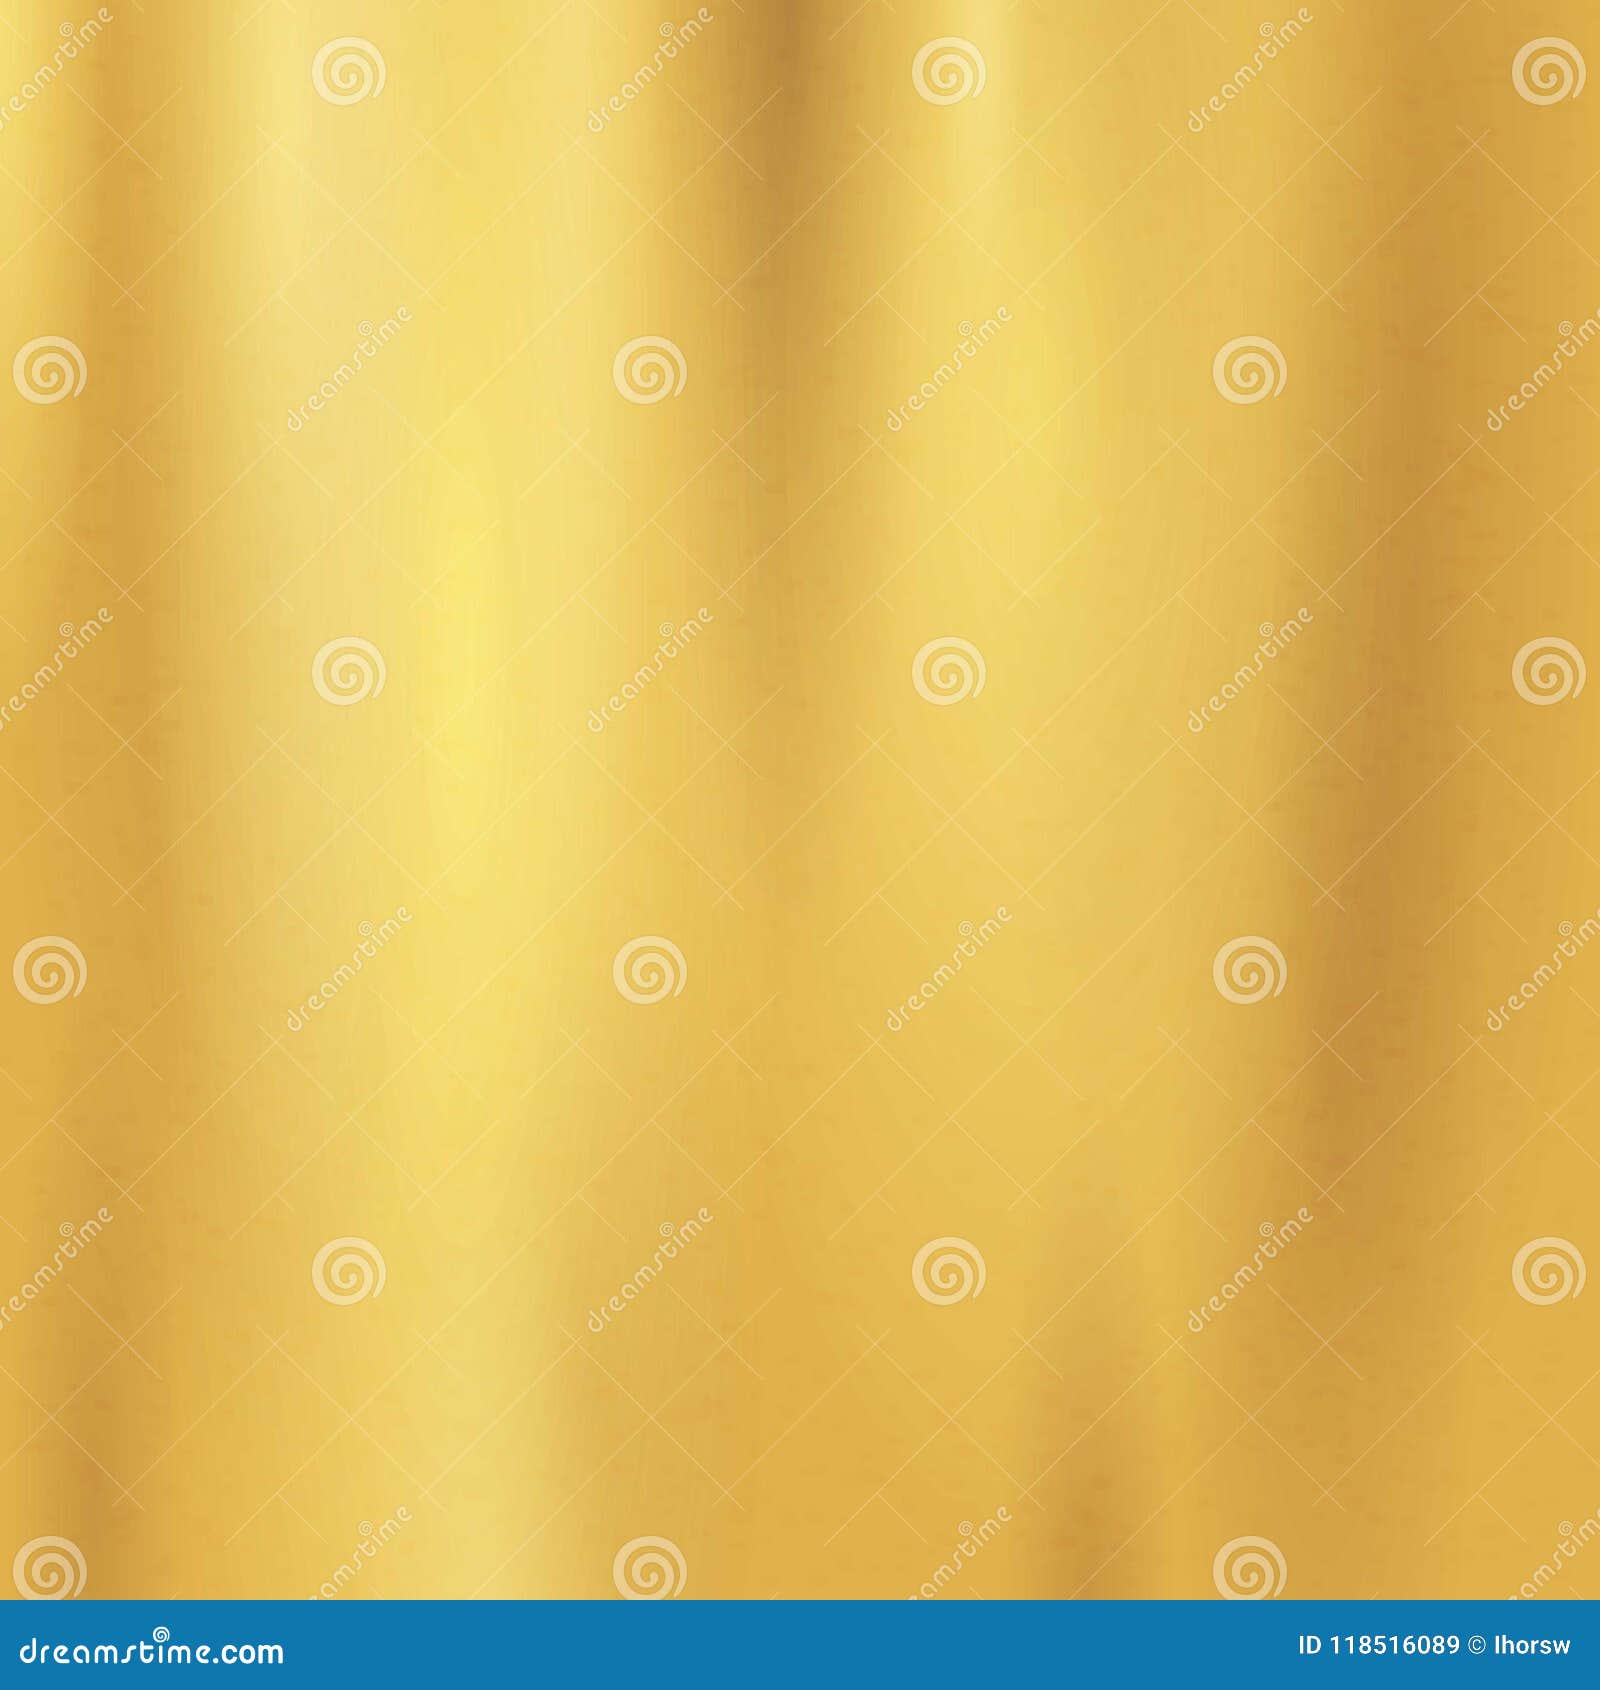 gold texture seamless pattern. light realistic, shiny, metallic empty golden gradient template. abs